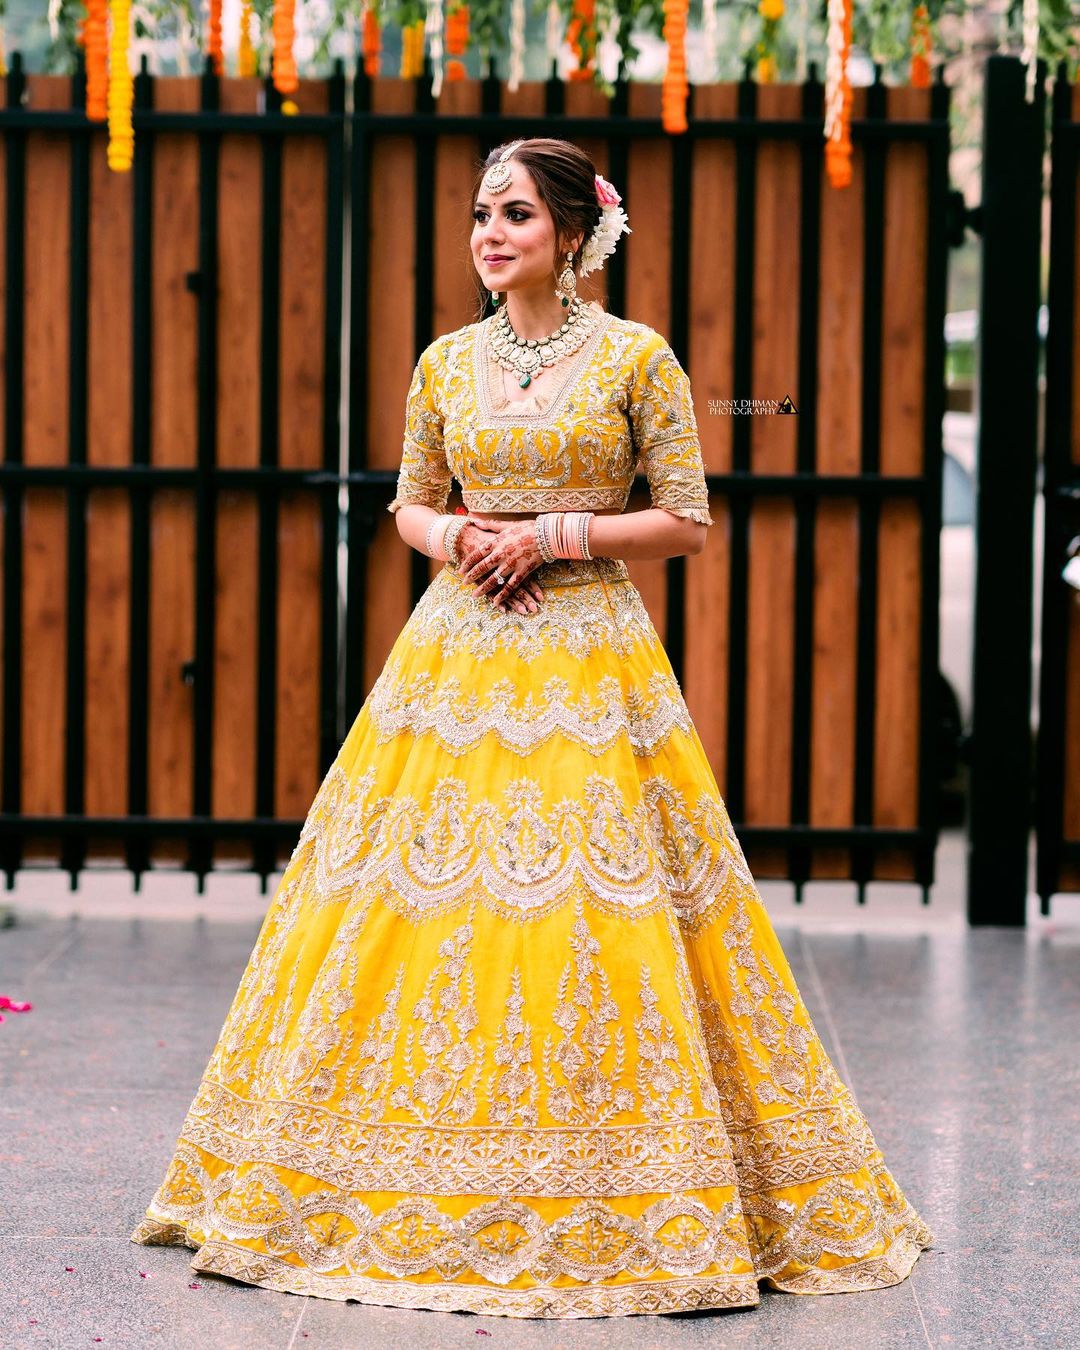 Offbeat yellow lehenga for the wedding day | Bridal lehenga, Yellow lehenga,  Indian wedding outfits